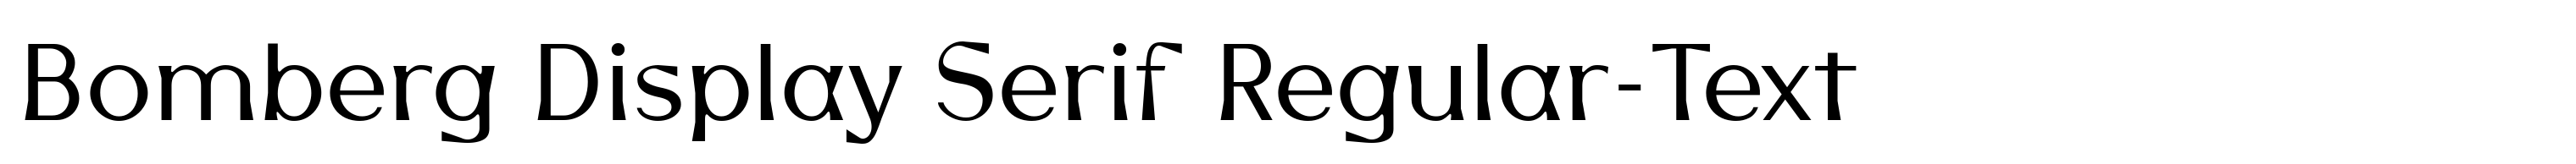 Bomberg Display Serif Regular-Text